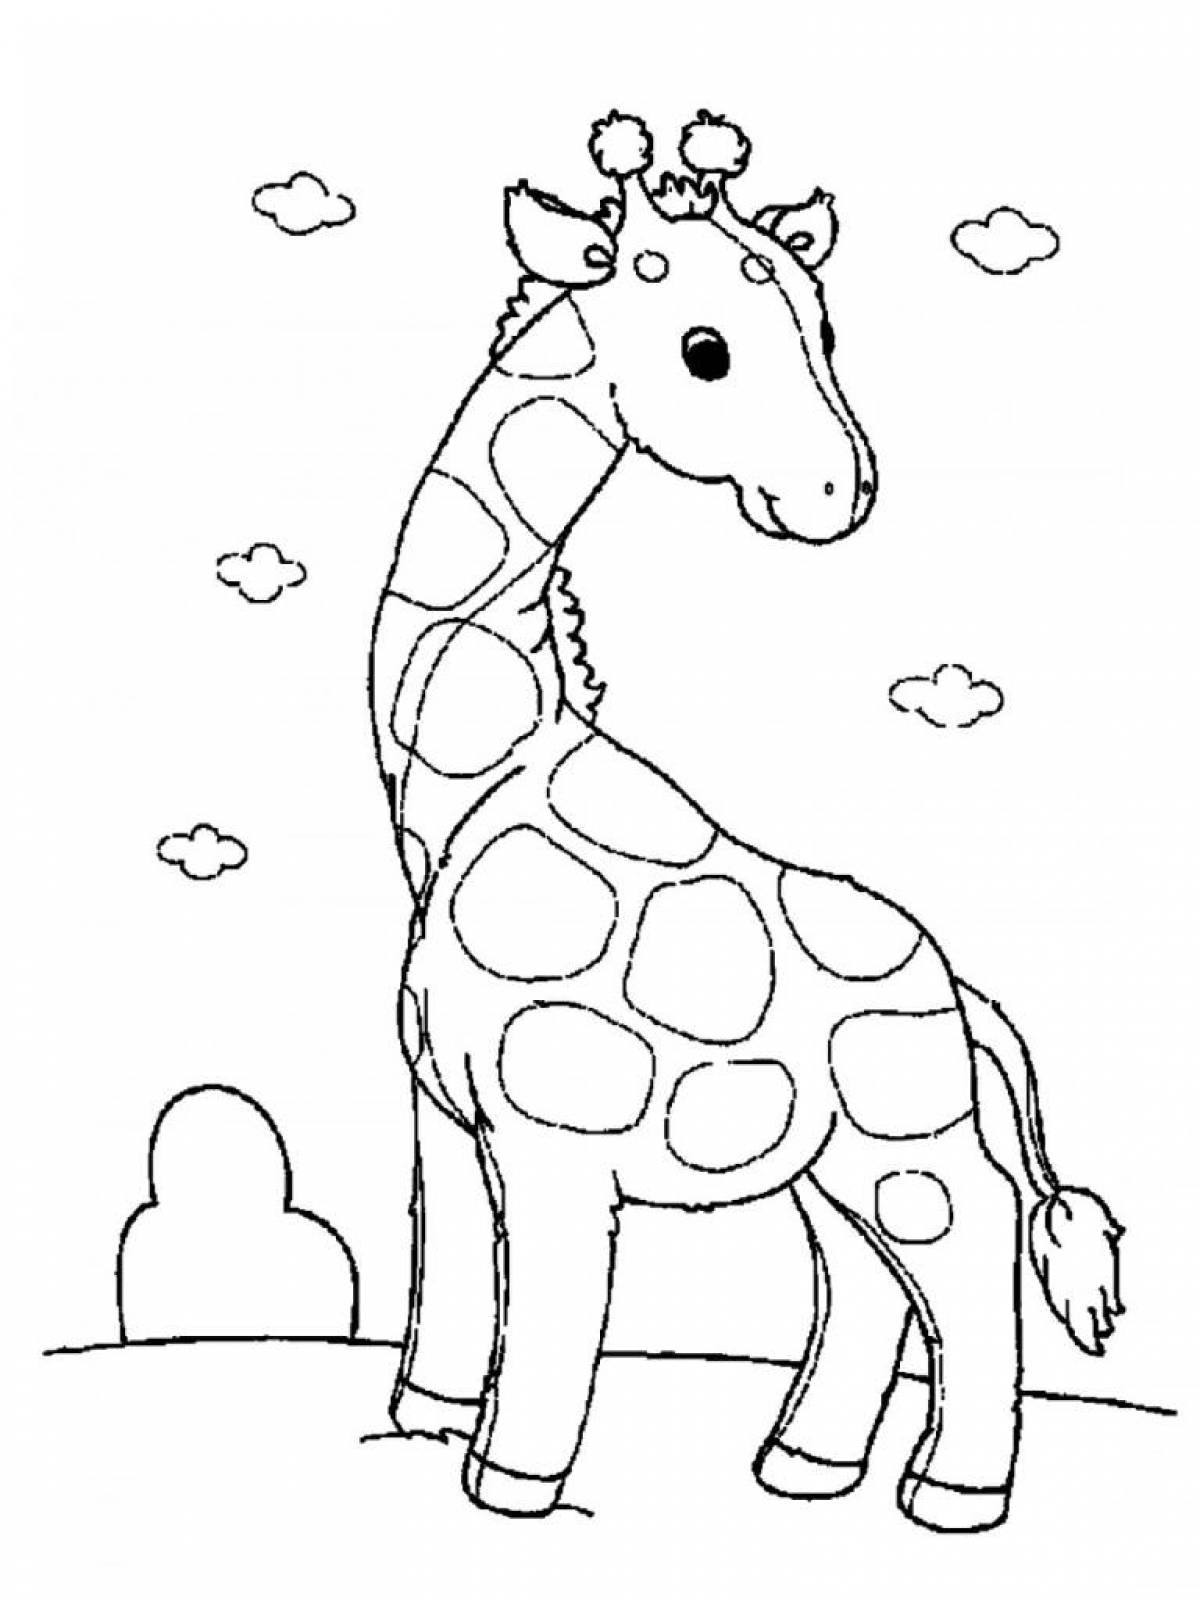 A fun giraffe coloring book for kids